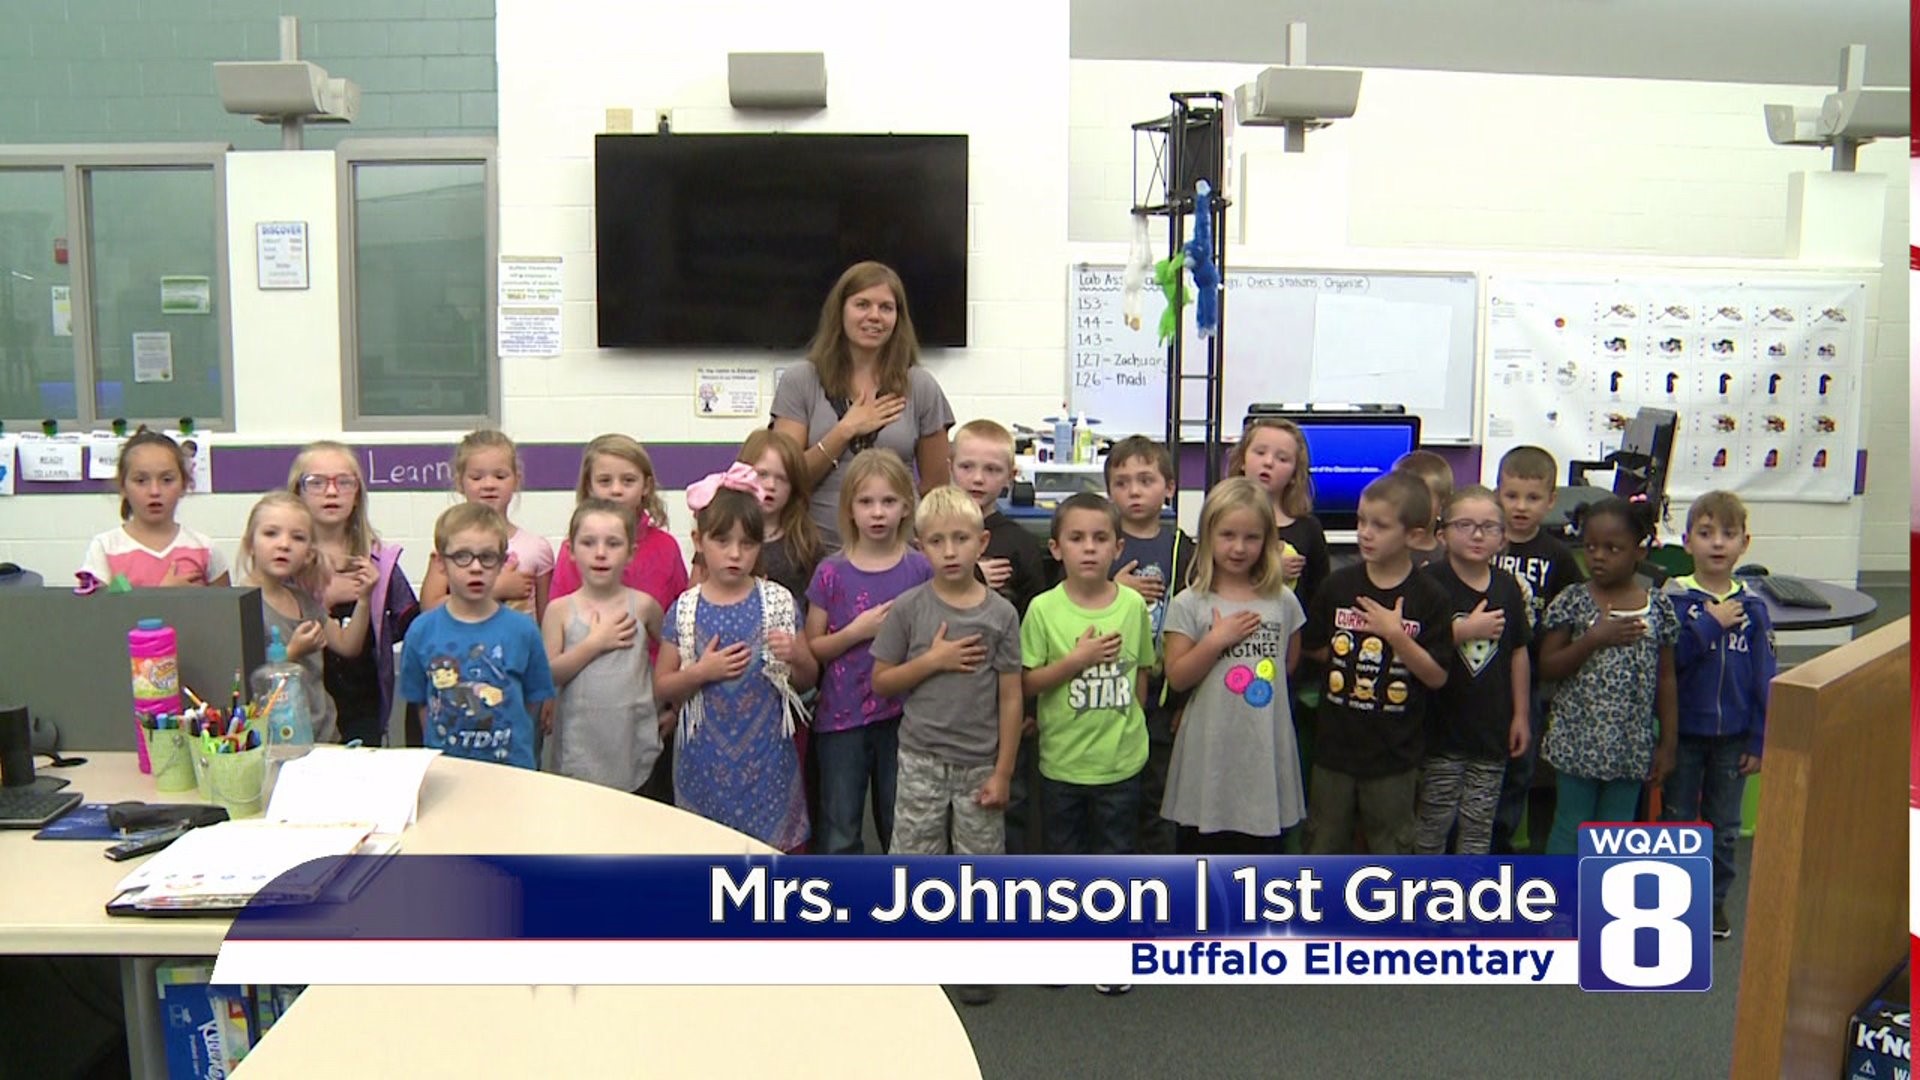 Mrs Johnson 1st grade - Buffalo Elementary